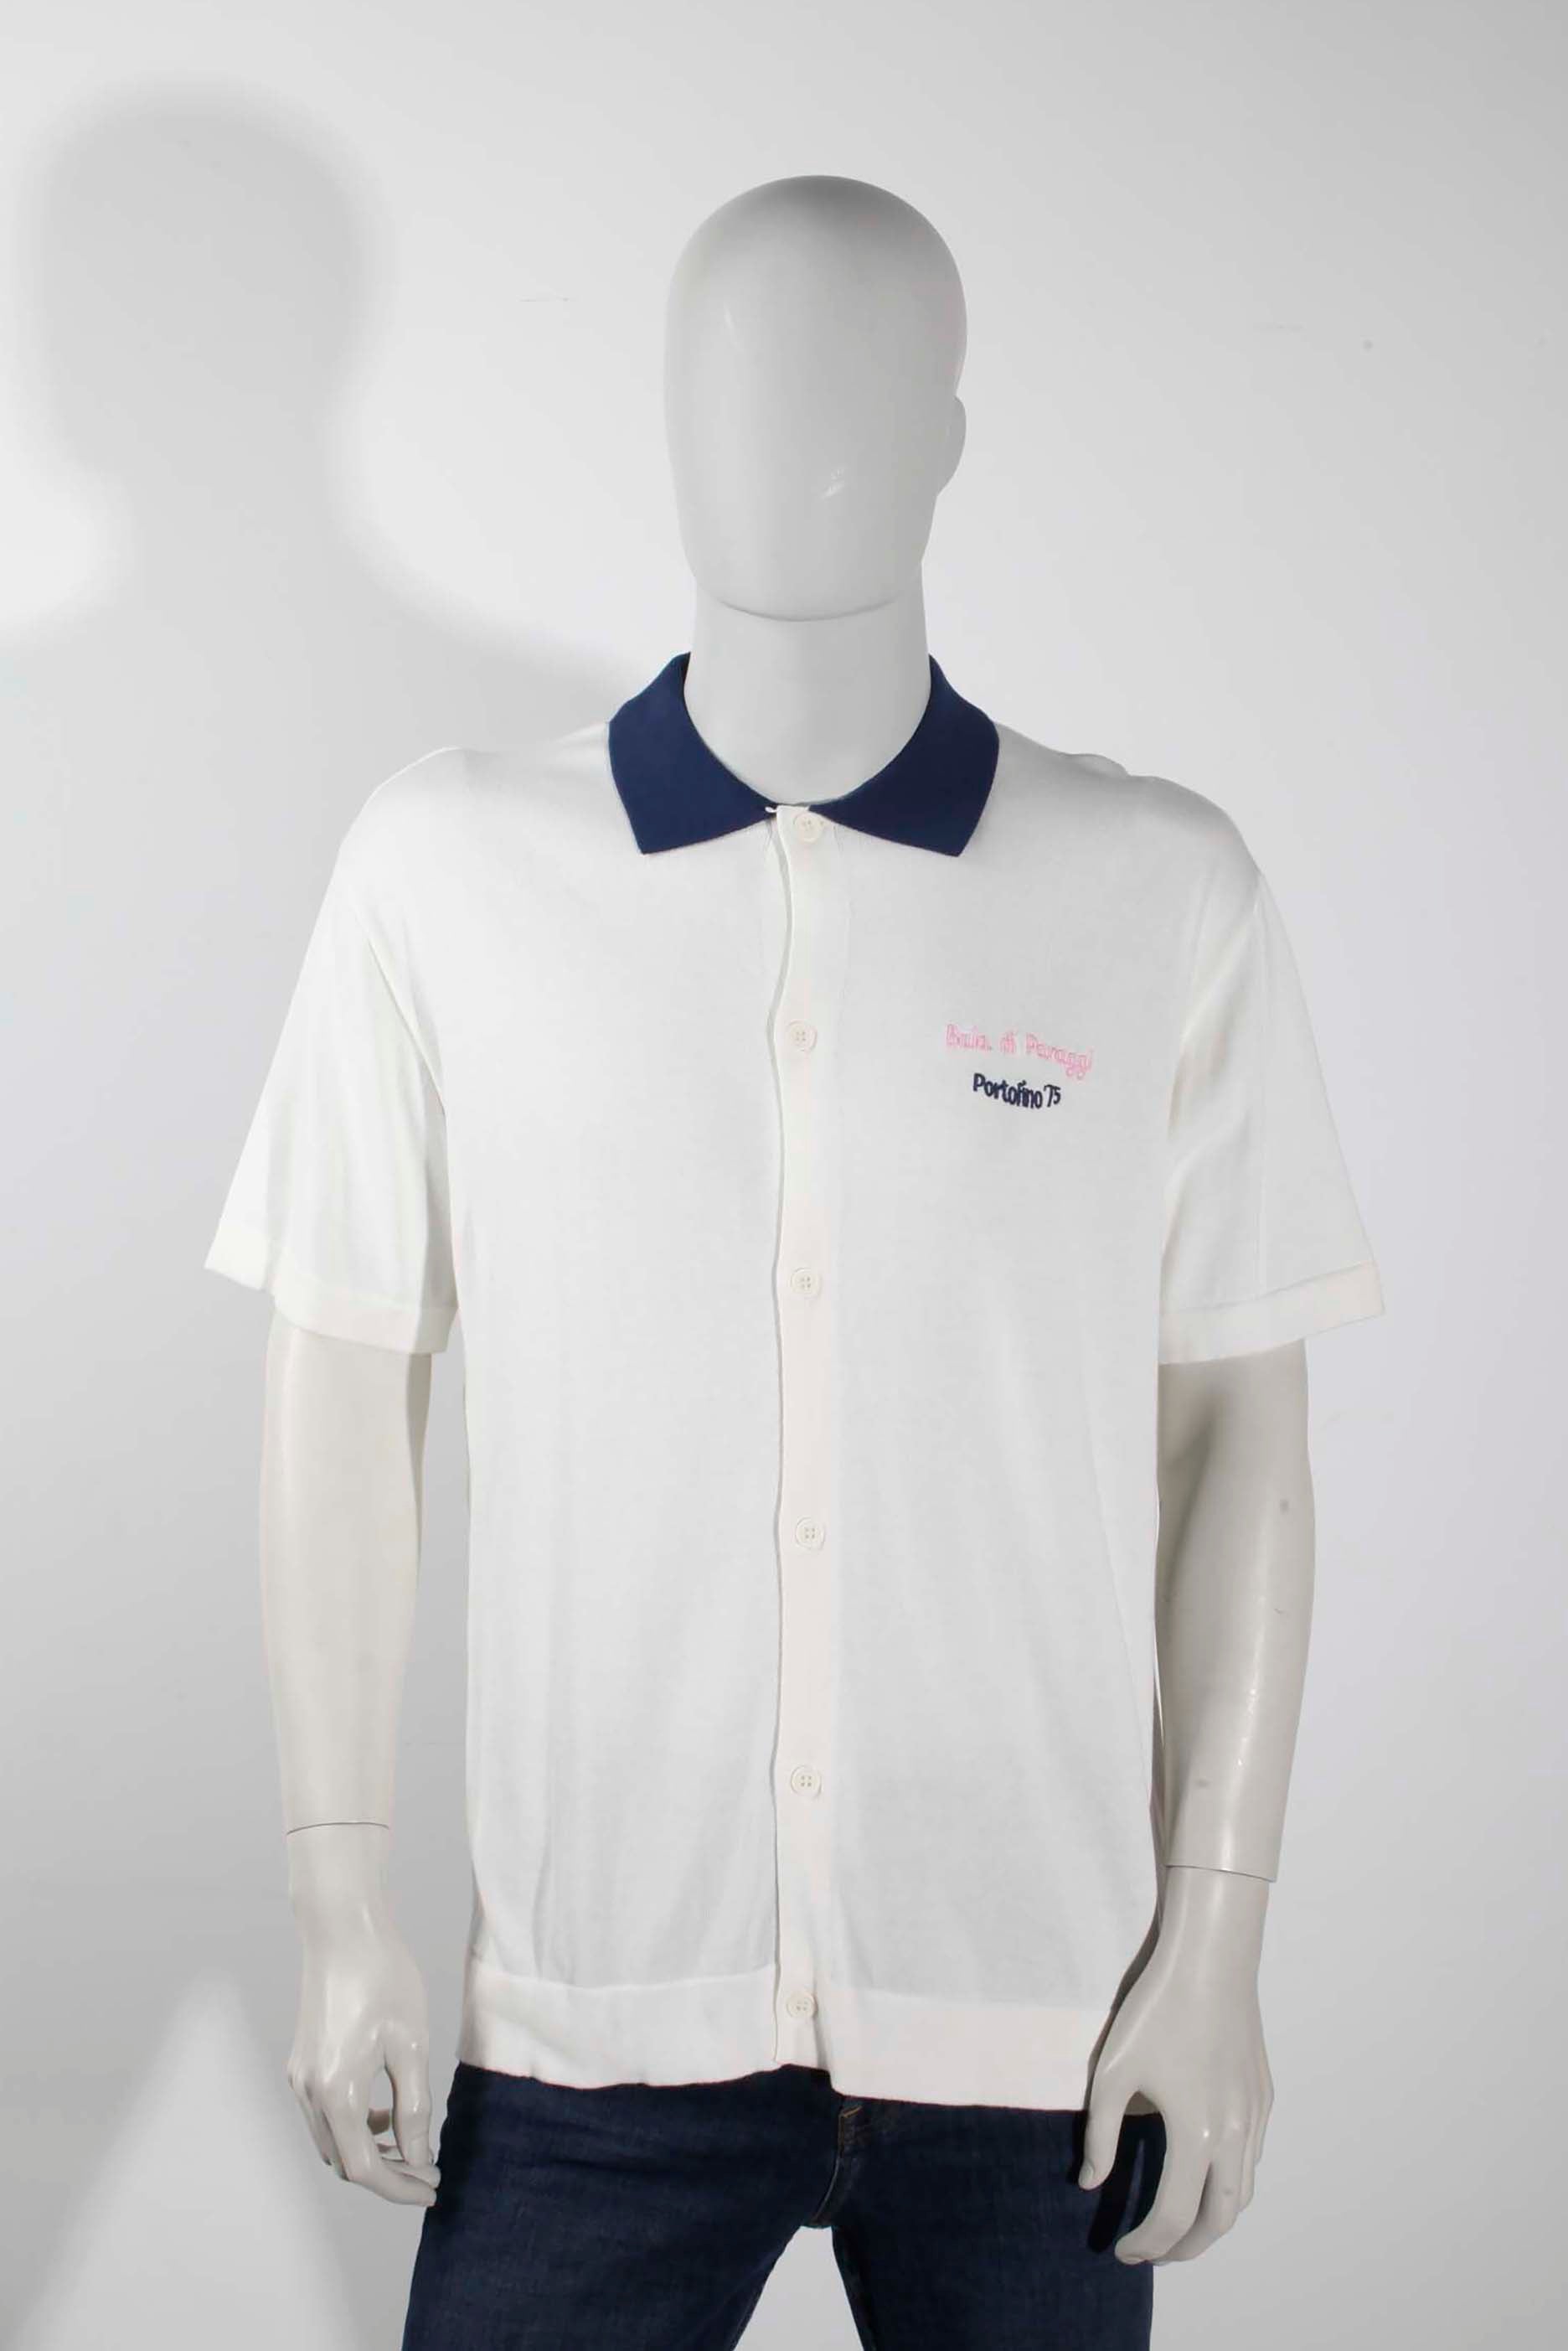 Mens White Polo Shirt with Blue Collar (Medium)